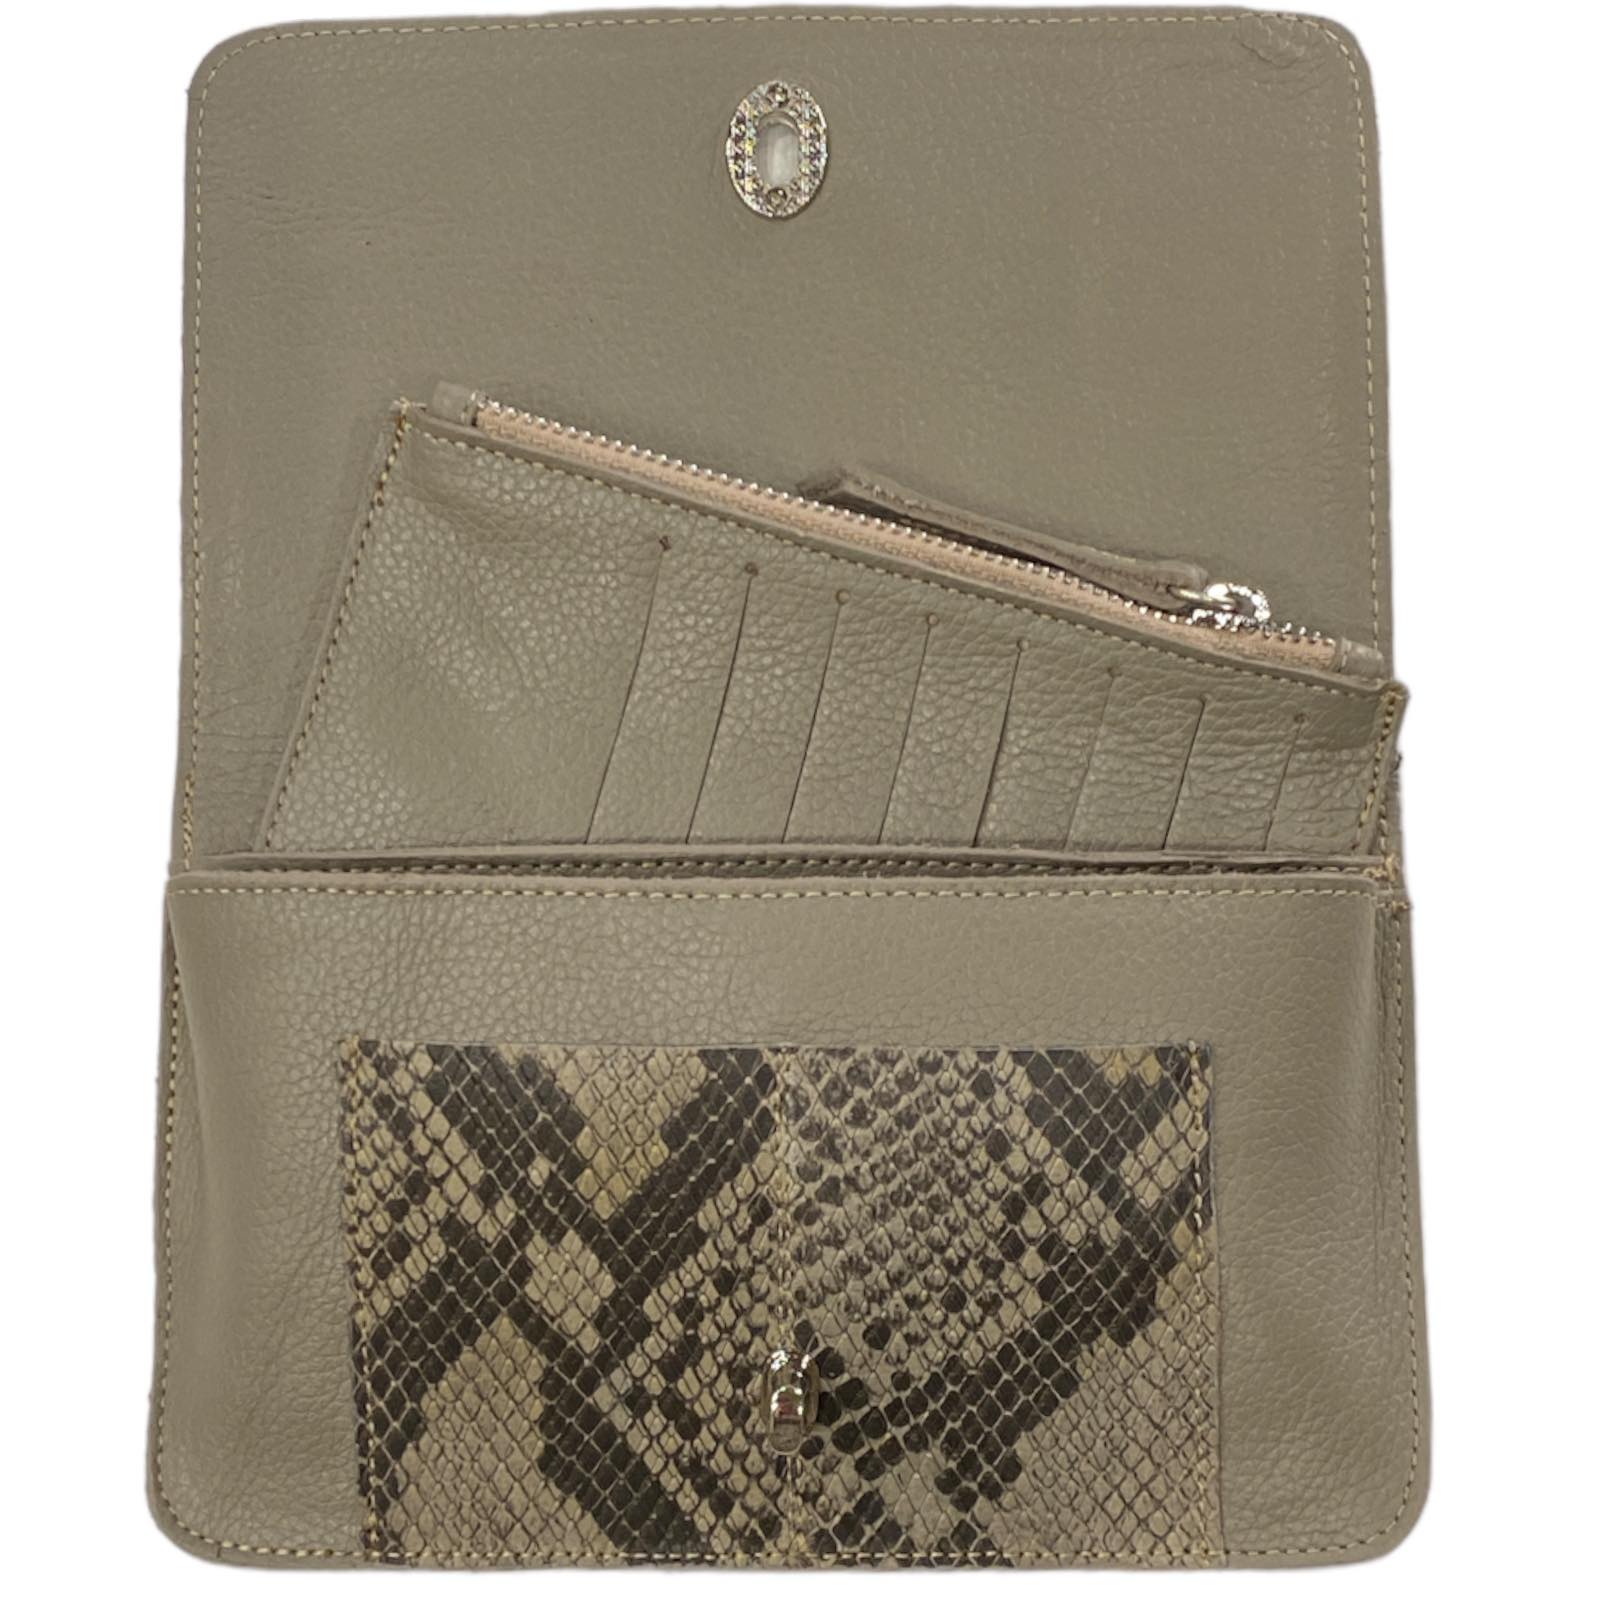 Grey leather multi wallet bag